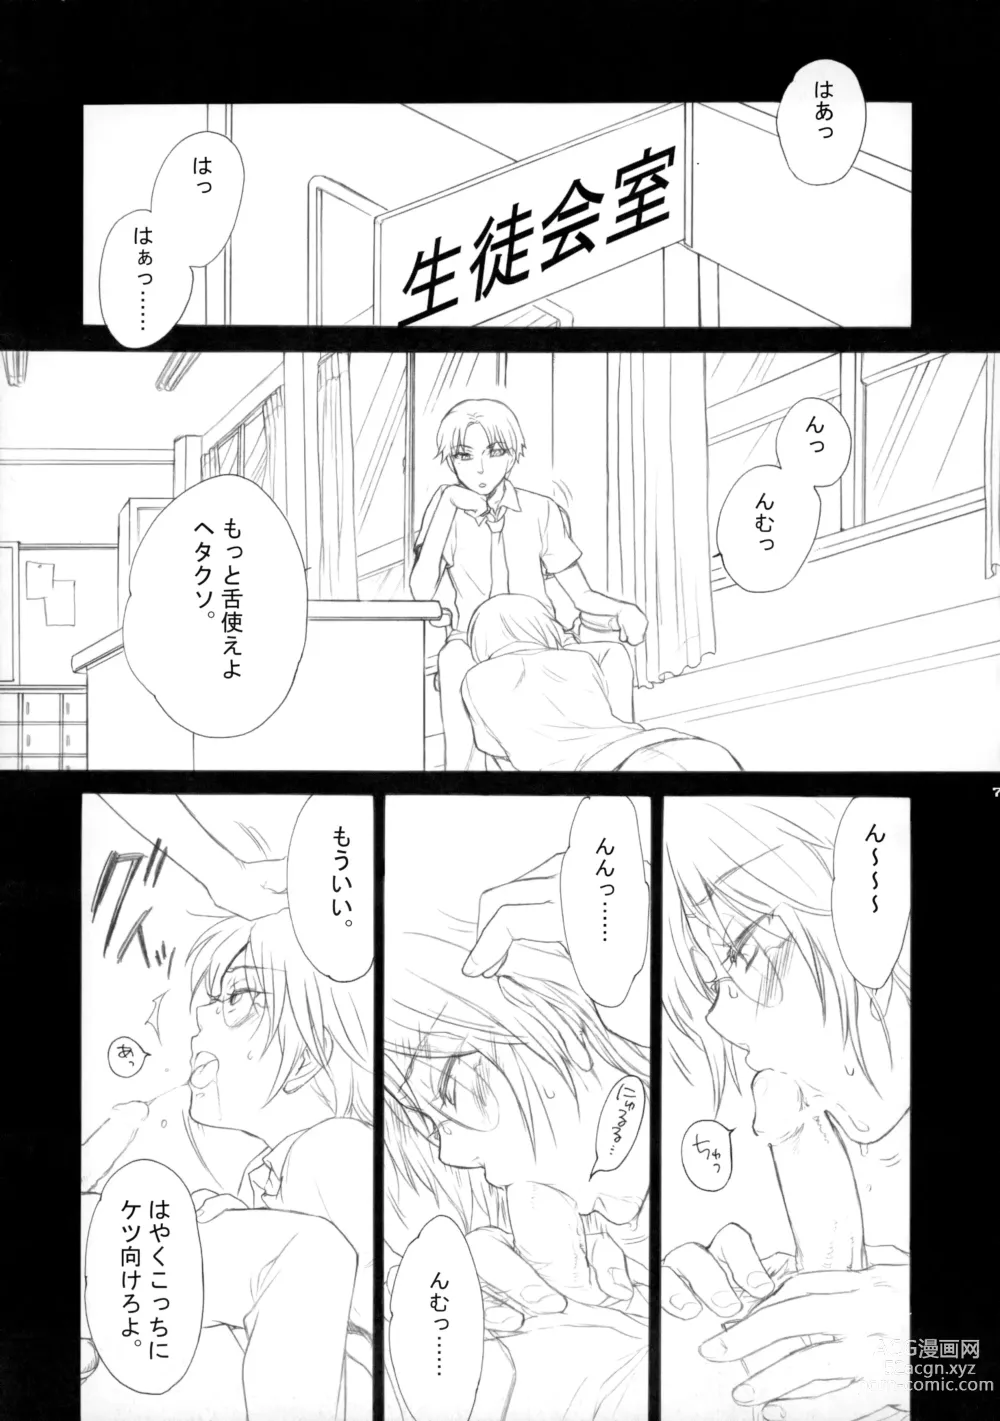 Page 6 of doujinshi 幻視画少年